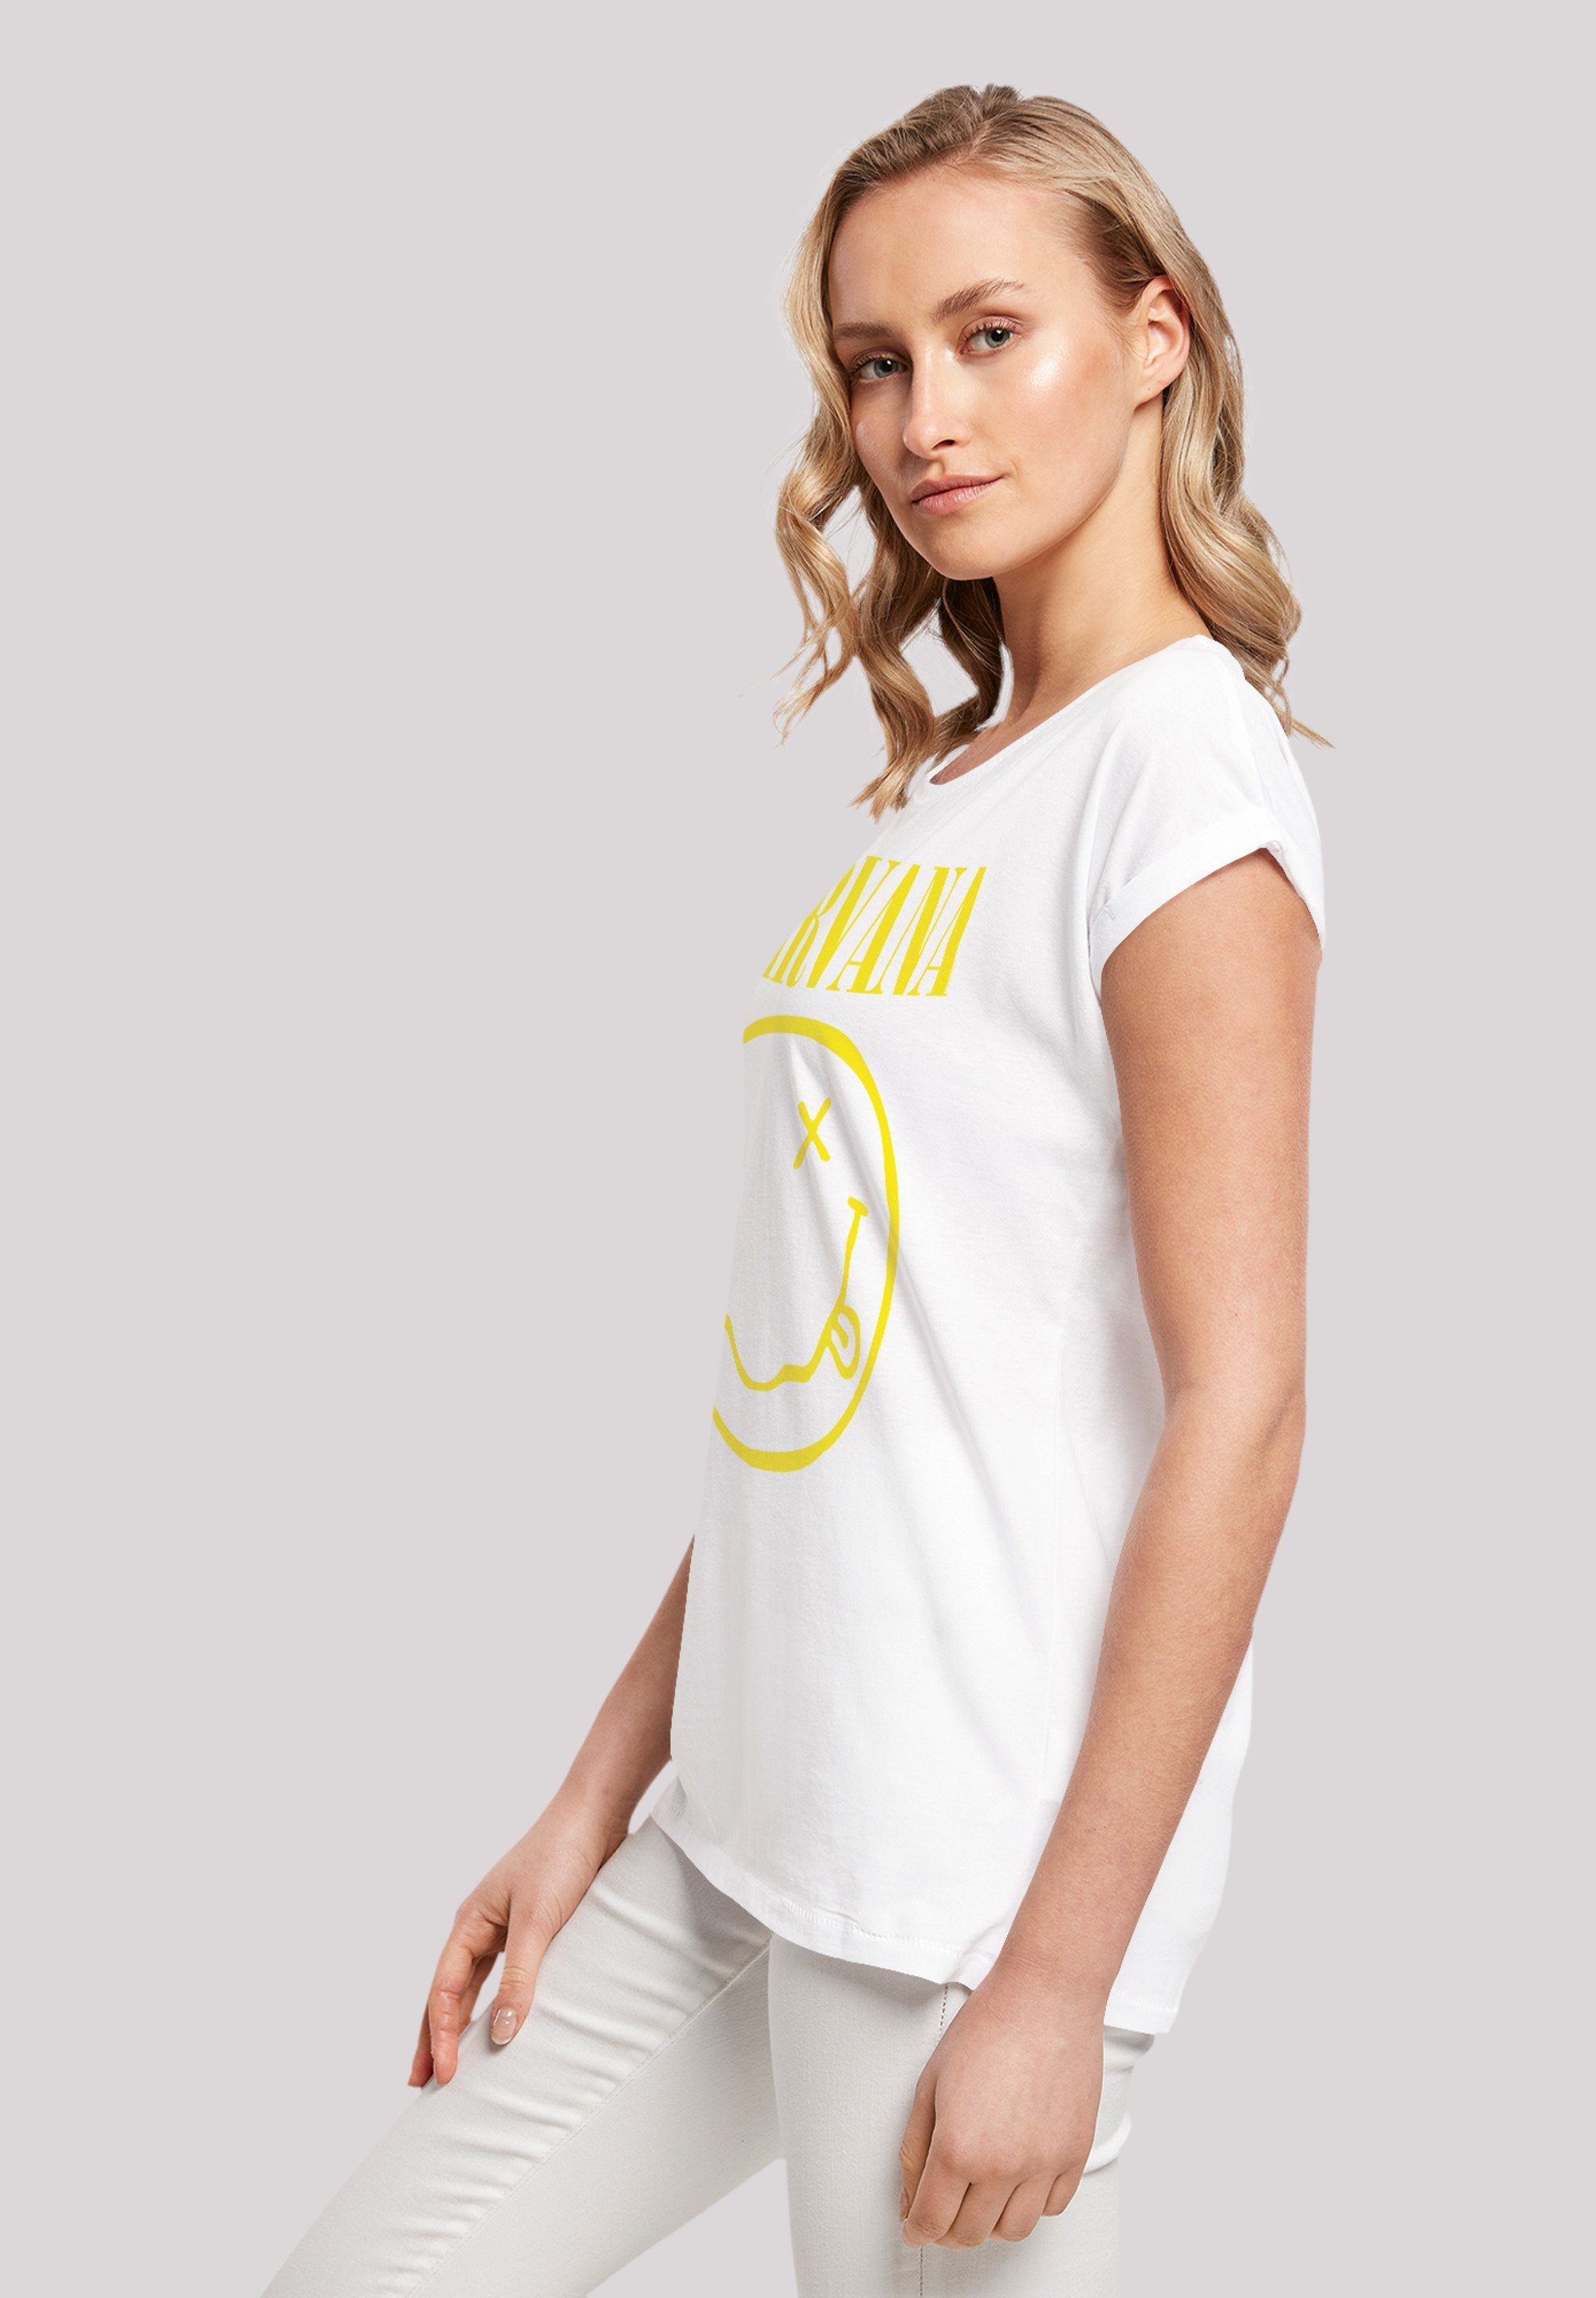 F4NT4STIC T-Shirt Yellow Band Premium Qualität Rock weiß Nirvana Face Happy